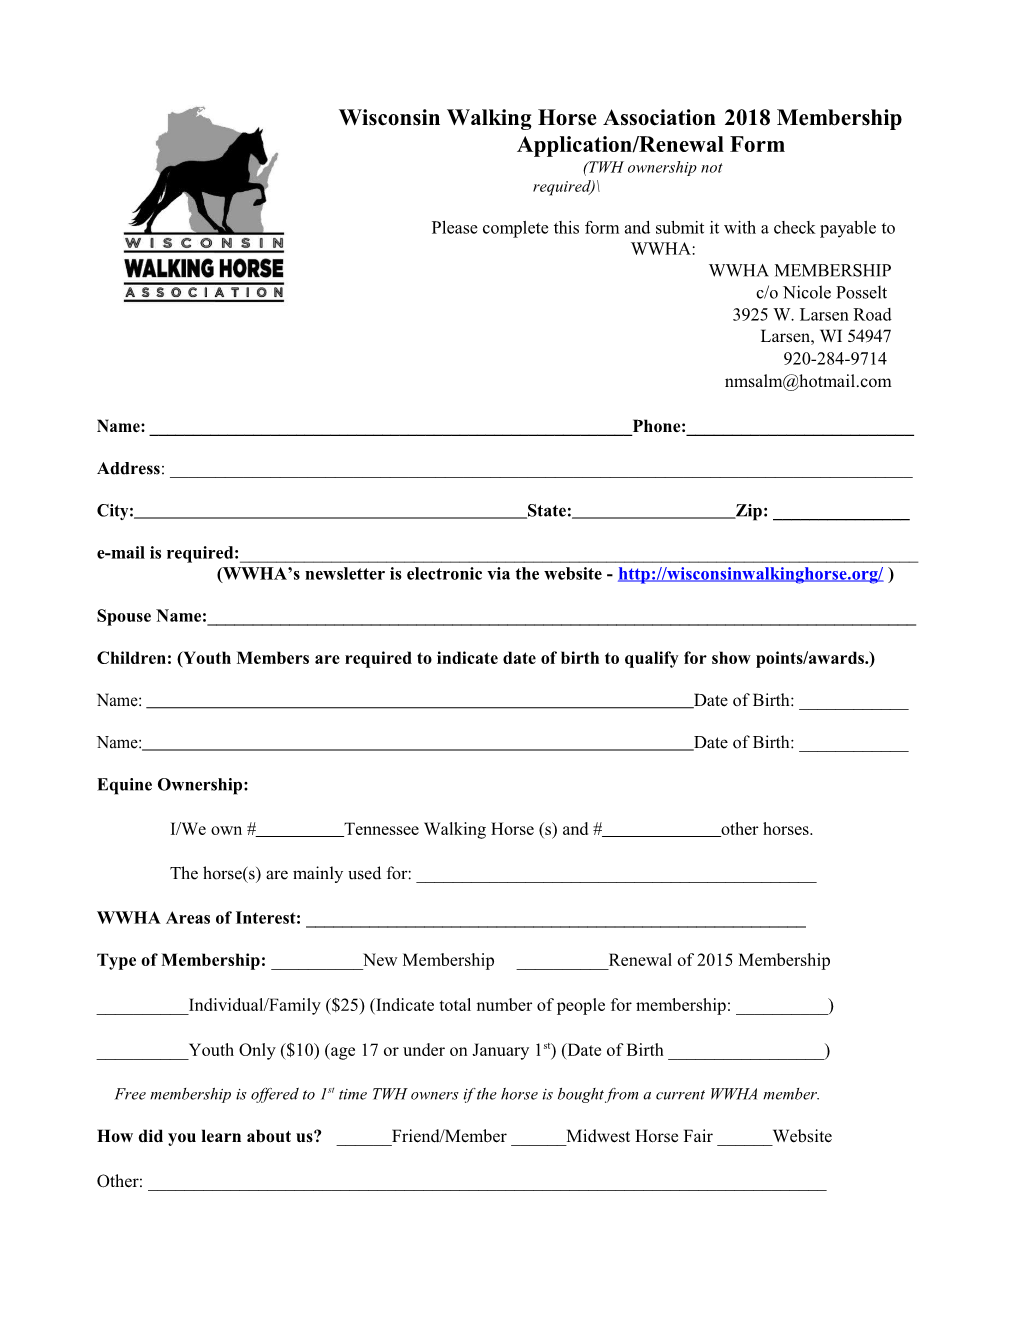 Wisconsin Walking Horse Association 2018 Membership Application/Renewal Form